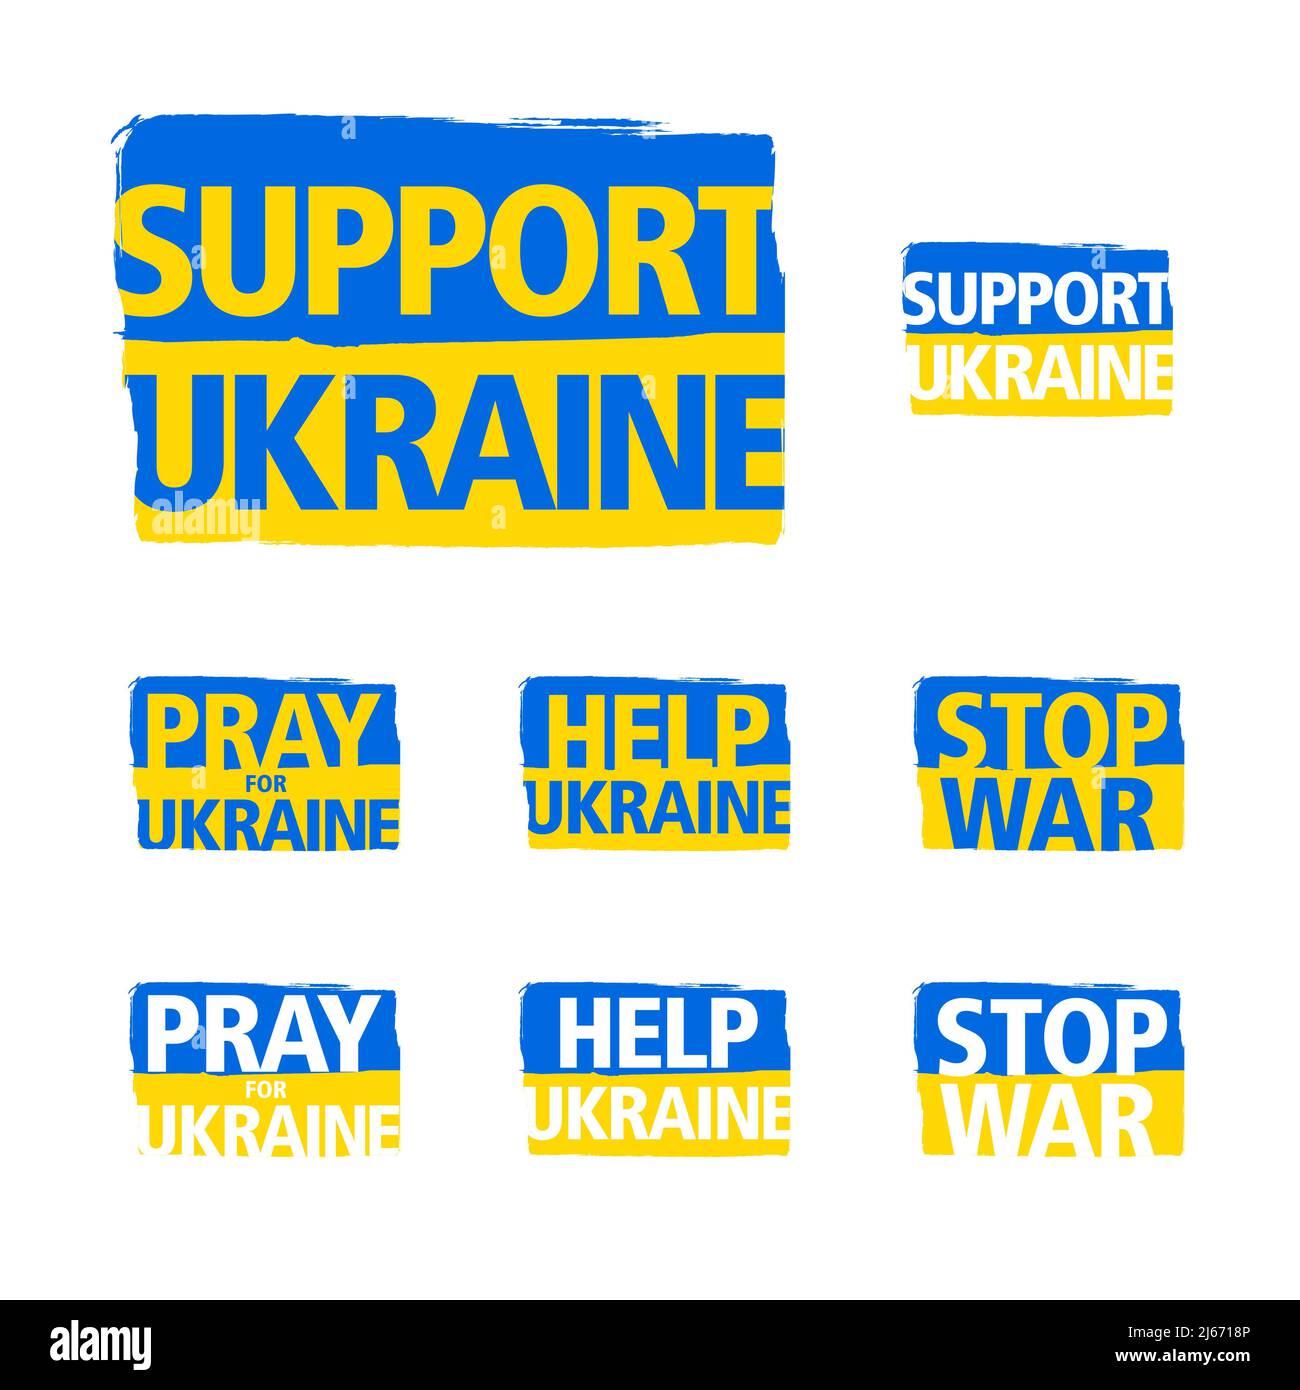 Ukrainian flag with paintbrush grungy effect. Support Ukraine sign inside it. Vector illustration. Stock Photo